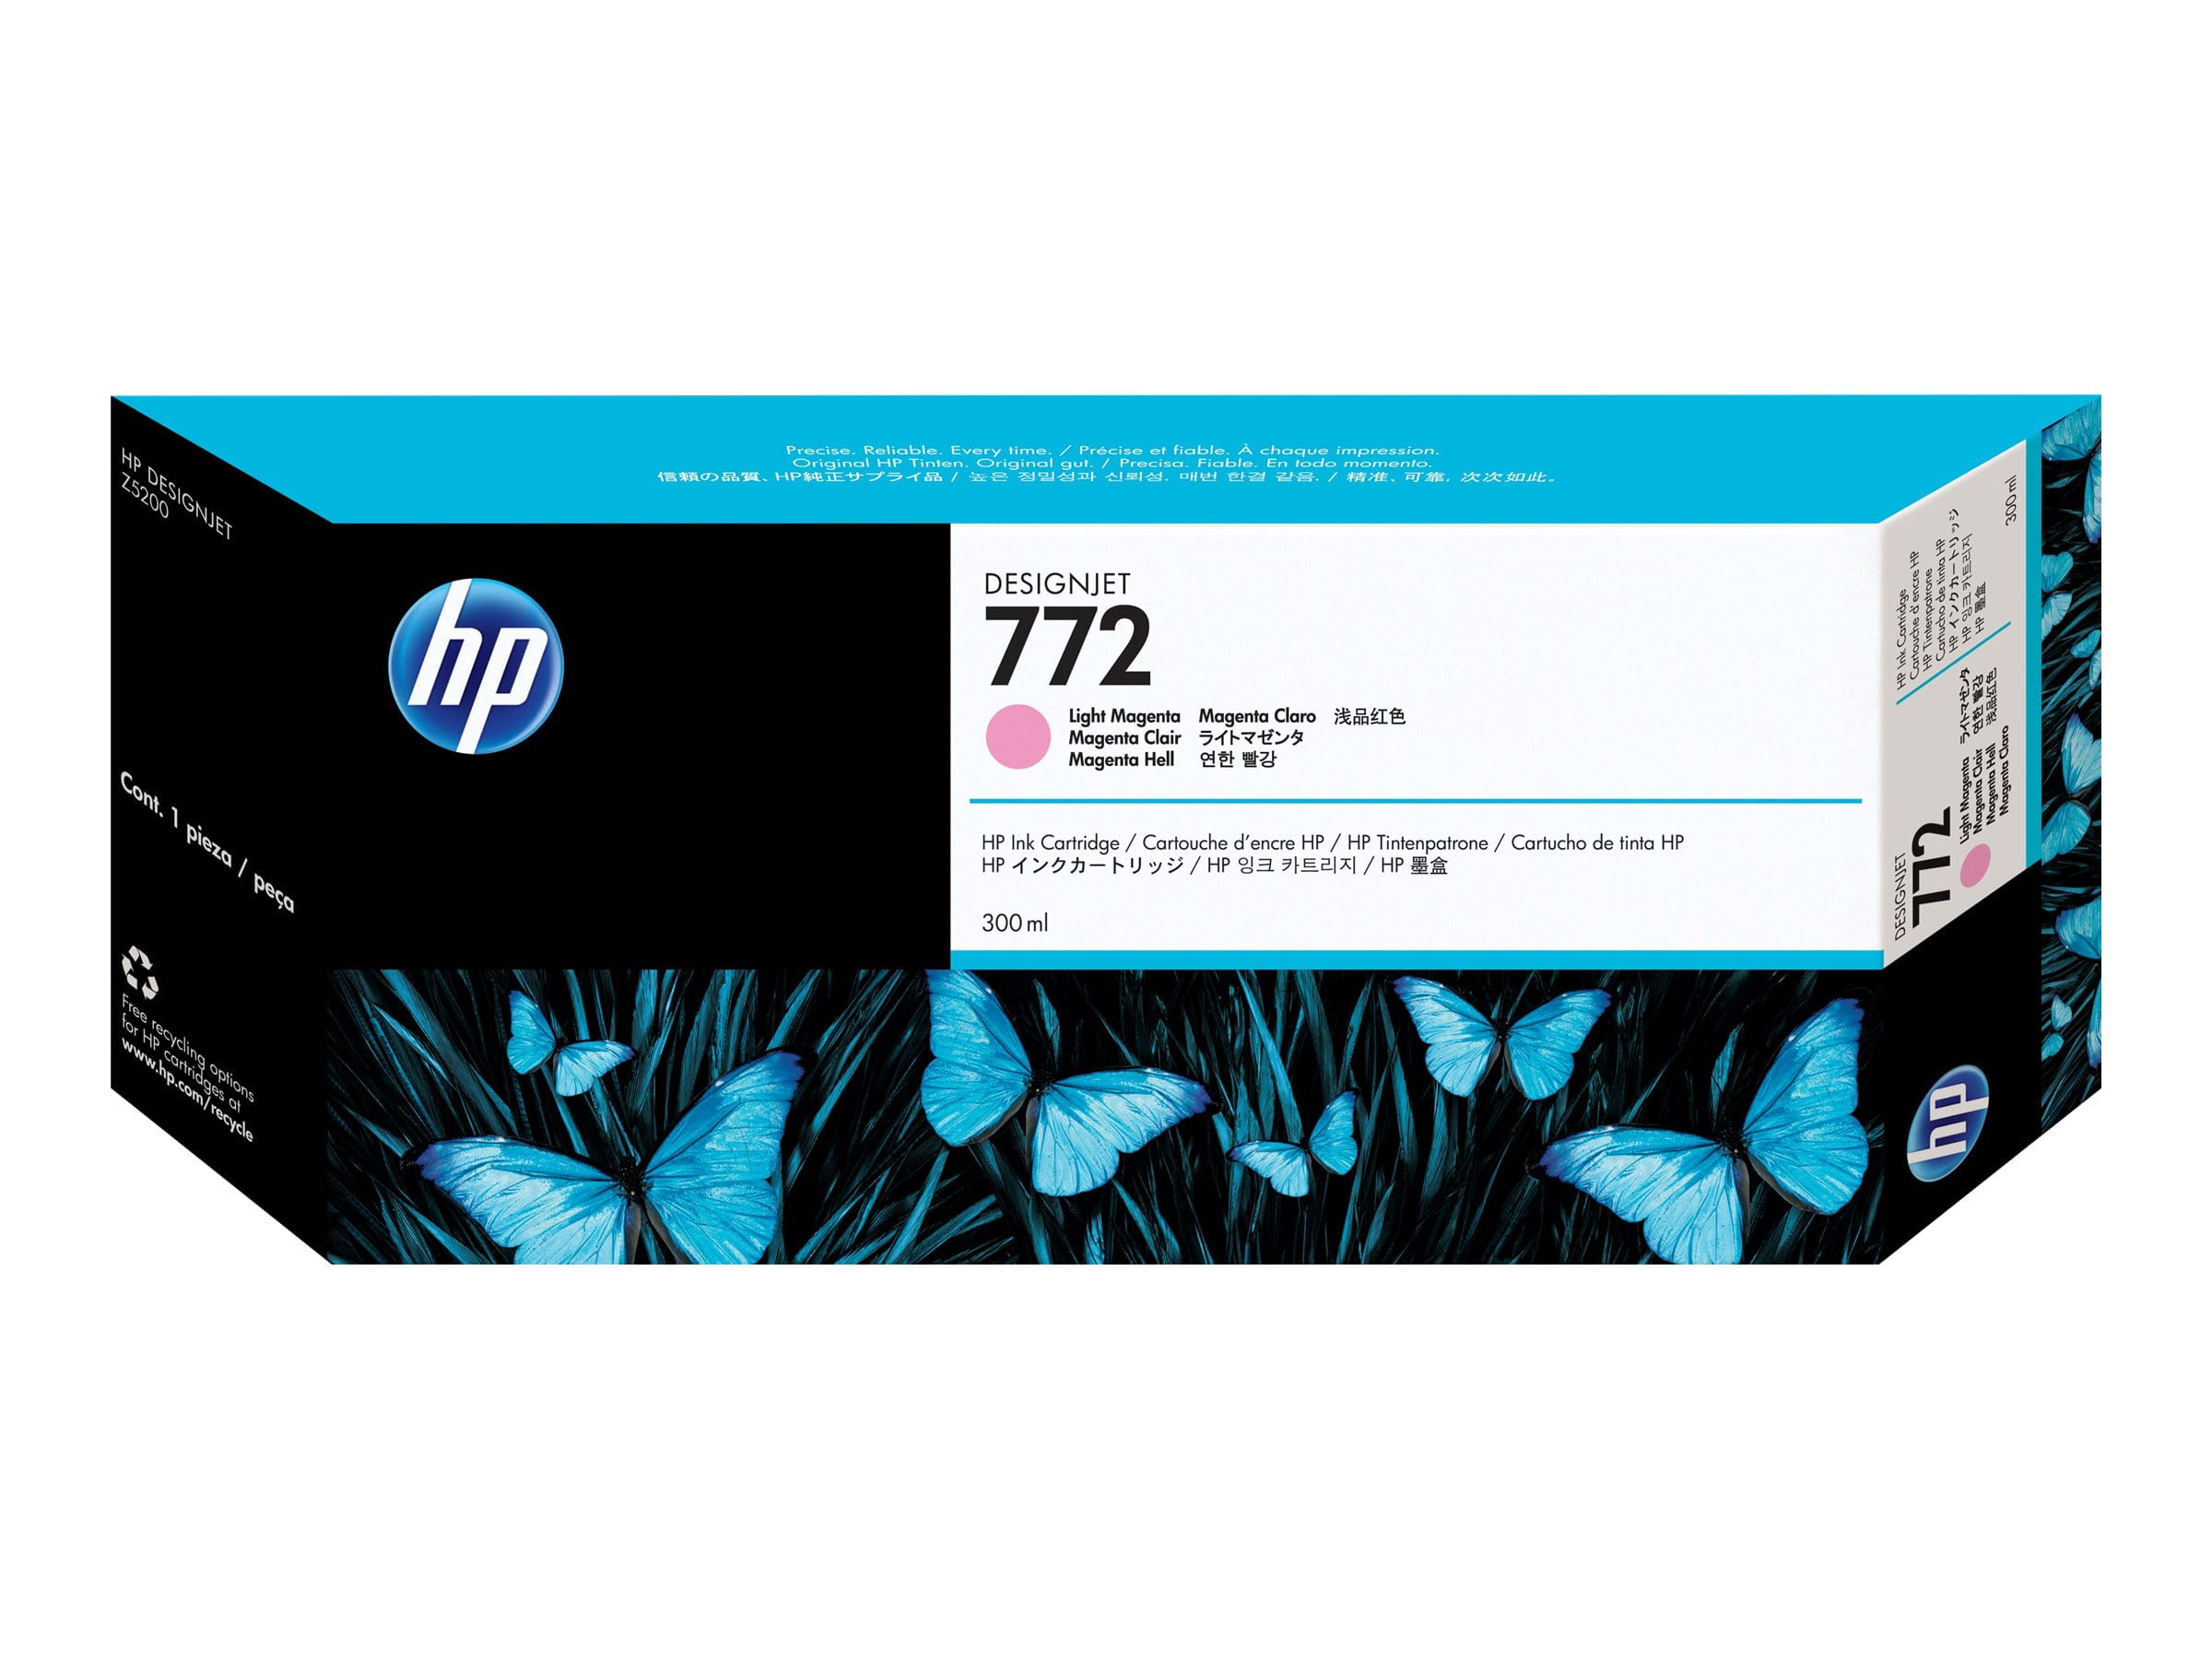 HP 772 - 300 ml - hellmagentafarben - original